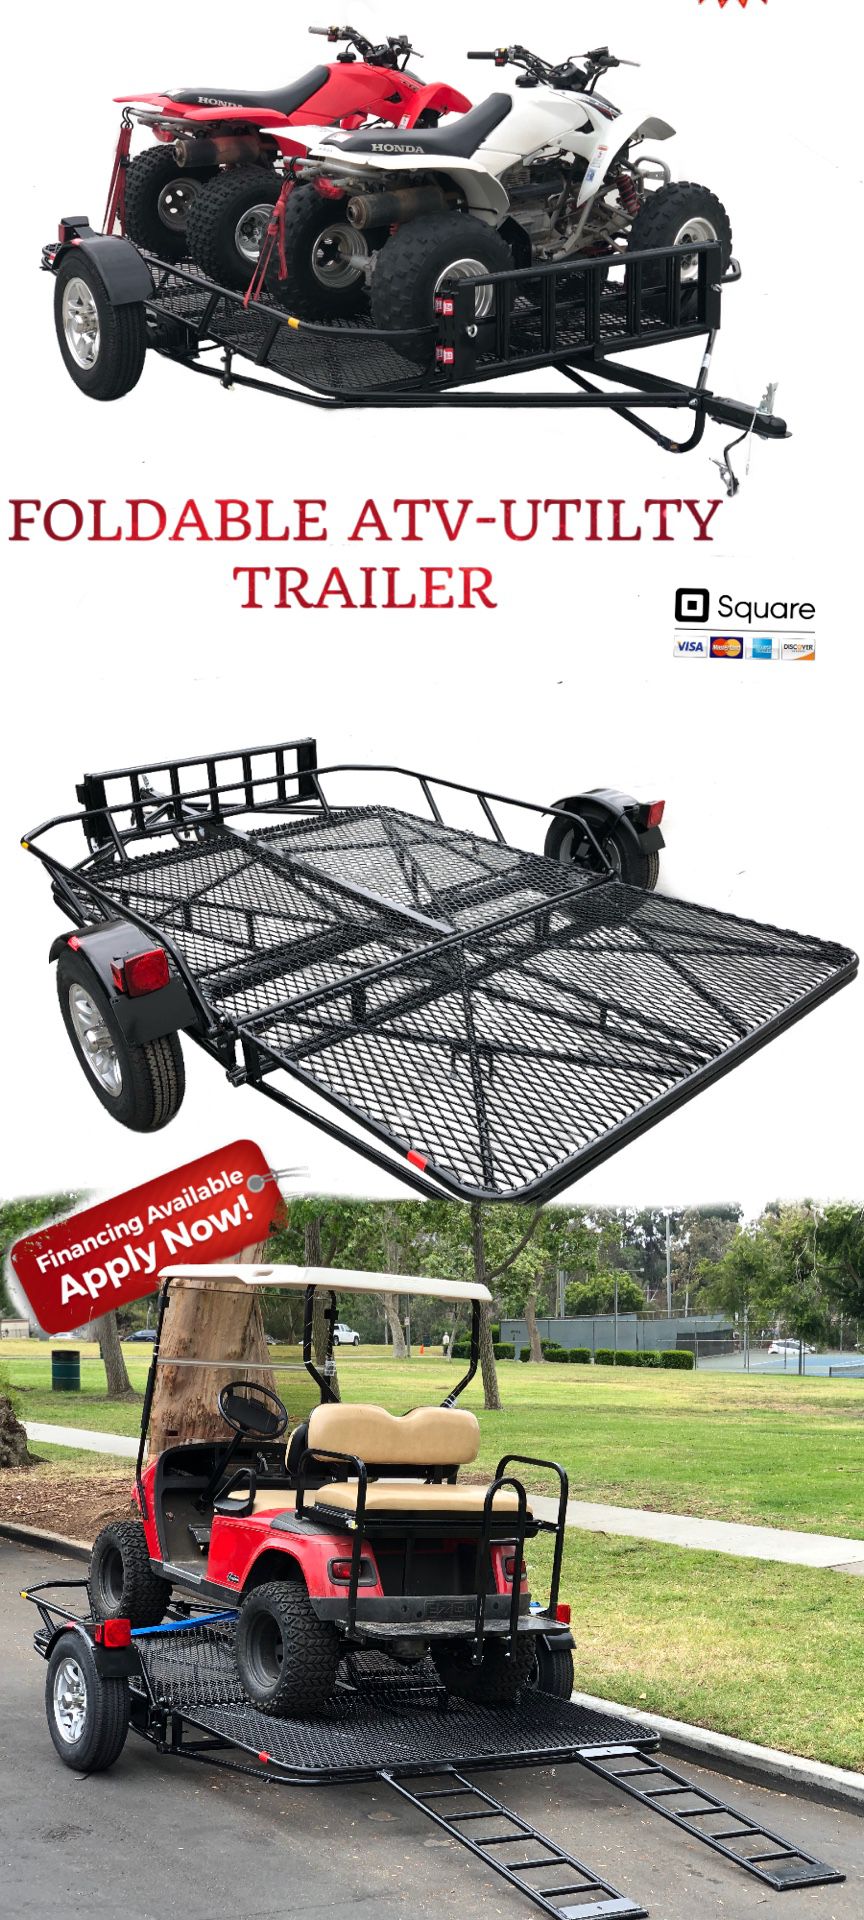 Foldable Utility Trailer for- ATV UTV Golf Cart Car wash Mobile Wash Trailer Toy hauler- Located in LOS ANGELES